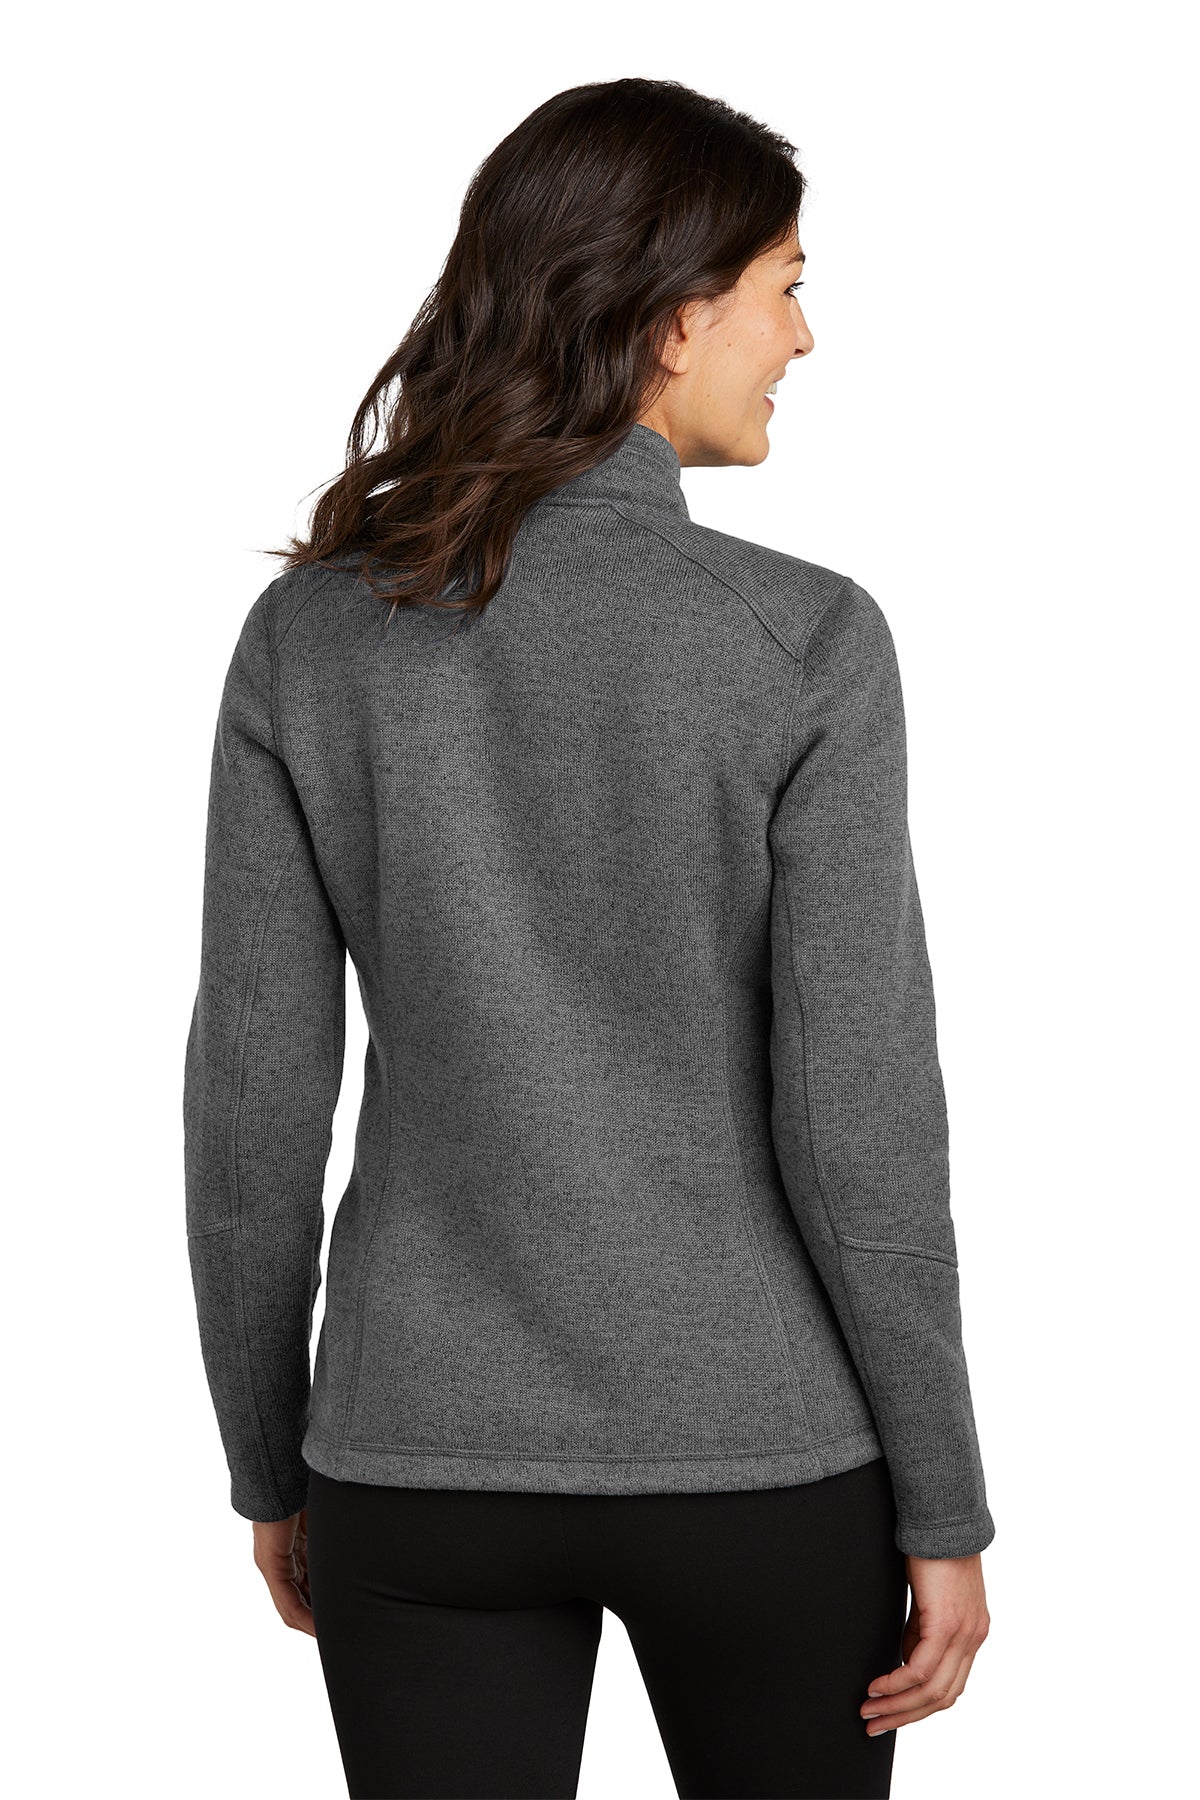 Port Authority Ladies Arc Sweater Fleece Custom Jackets, Grey Smoke Heather